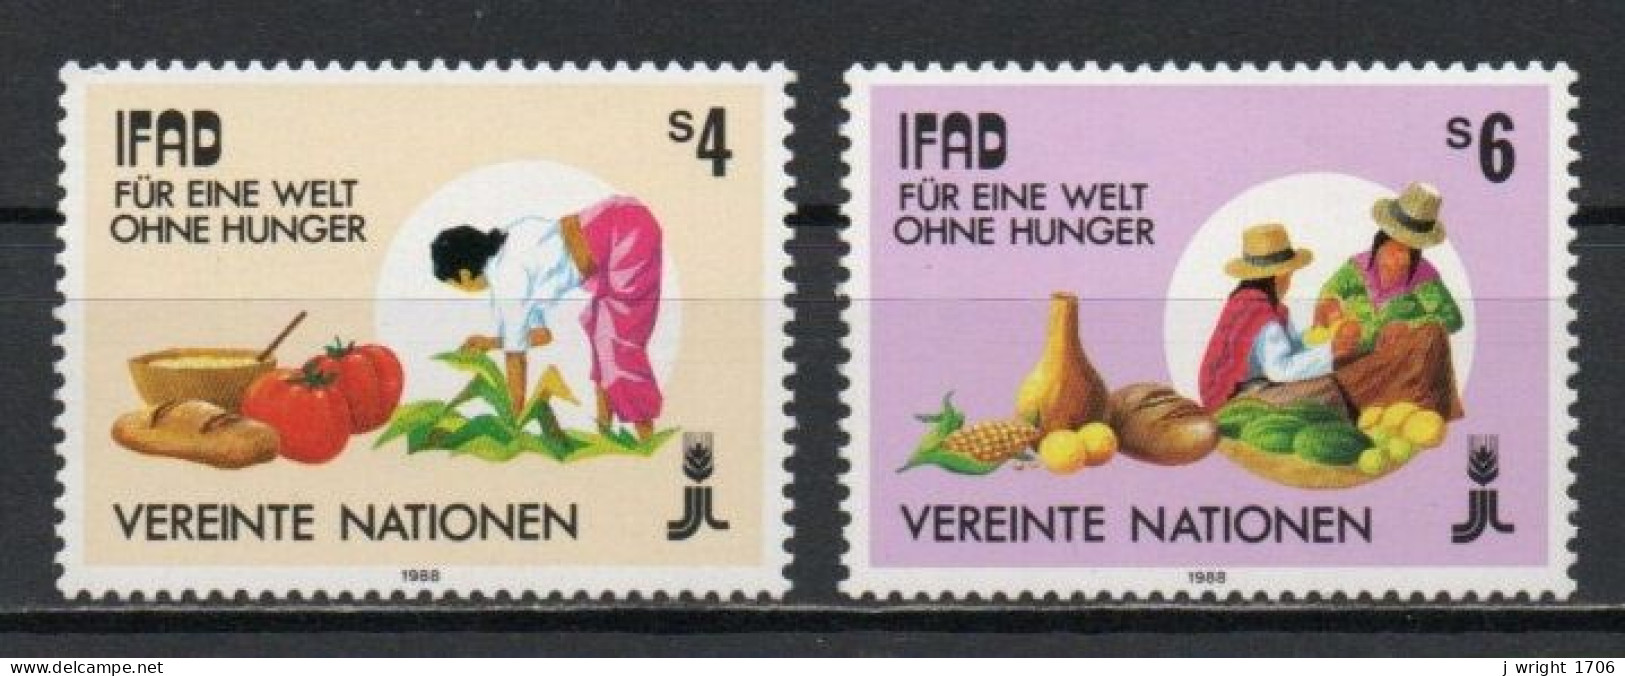 UN/Vienna, 1988, IFAD, Set, MNH - Unused Stamps